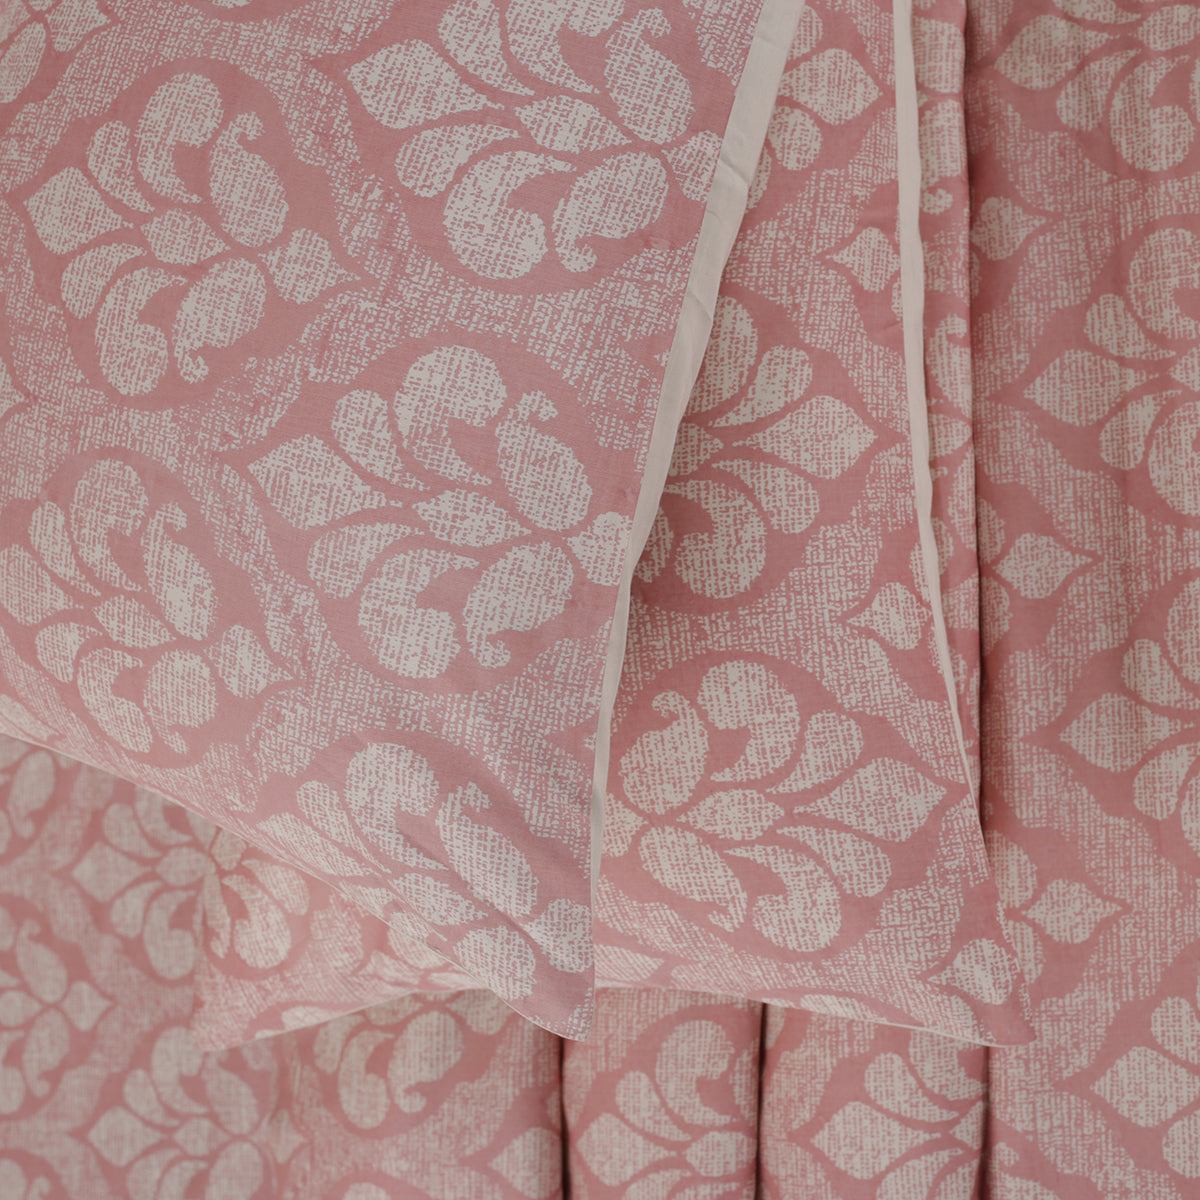 Folklore Transition Diamond Festivity Printed 100% Cotton Peach Ultra Soft Bed Sheet